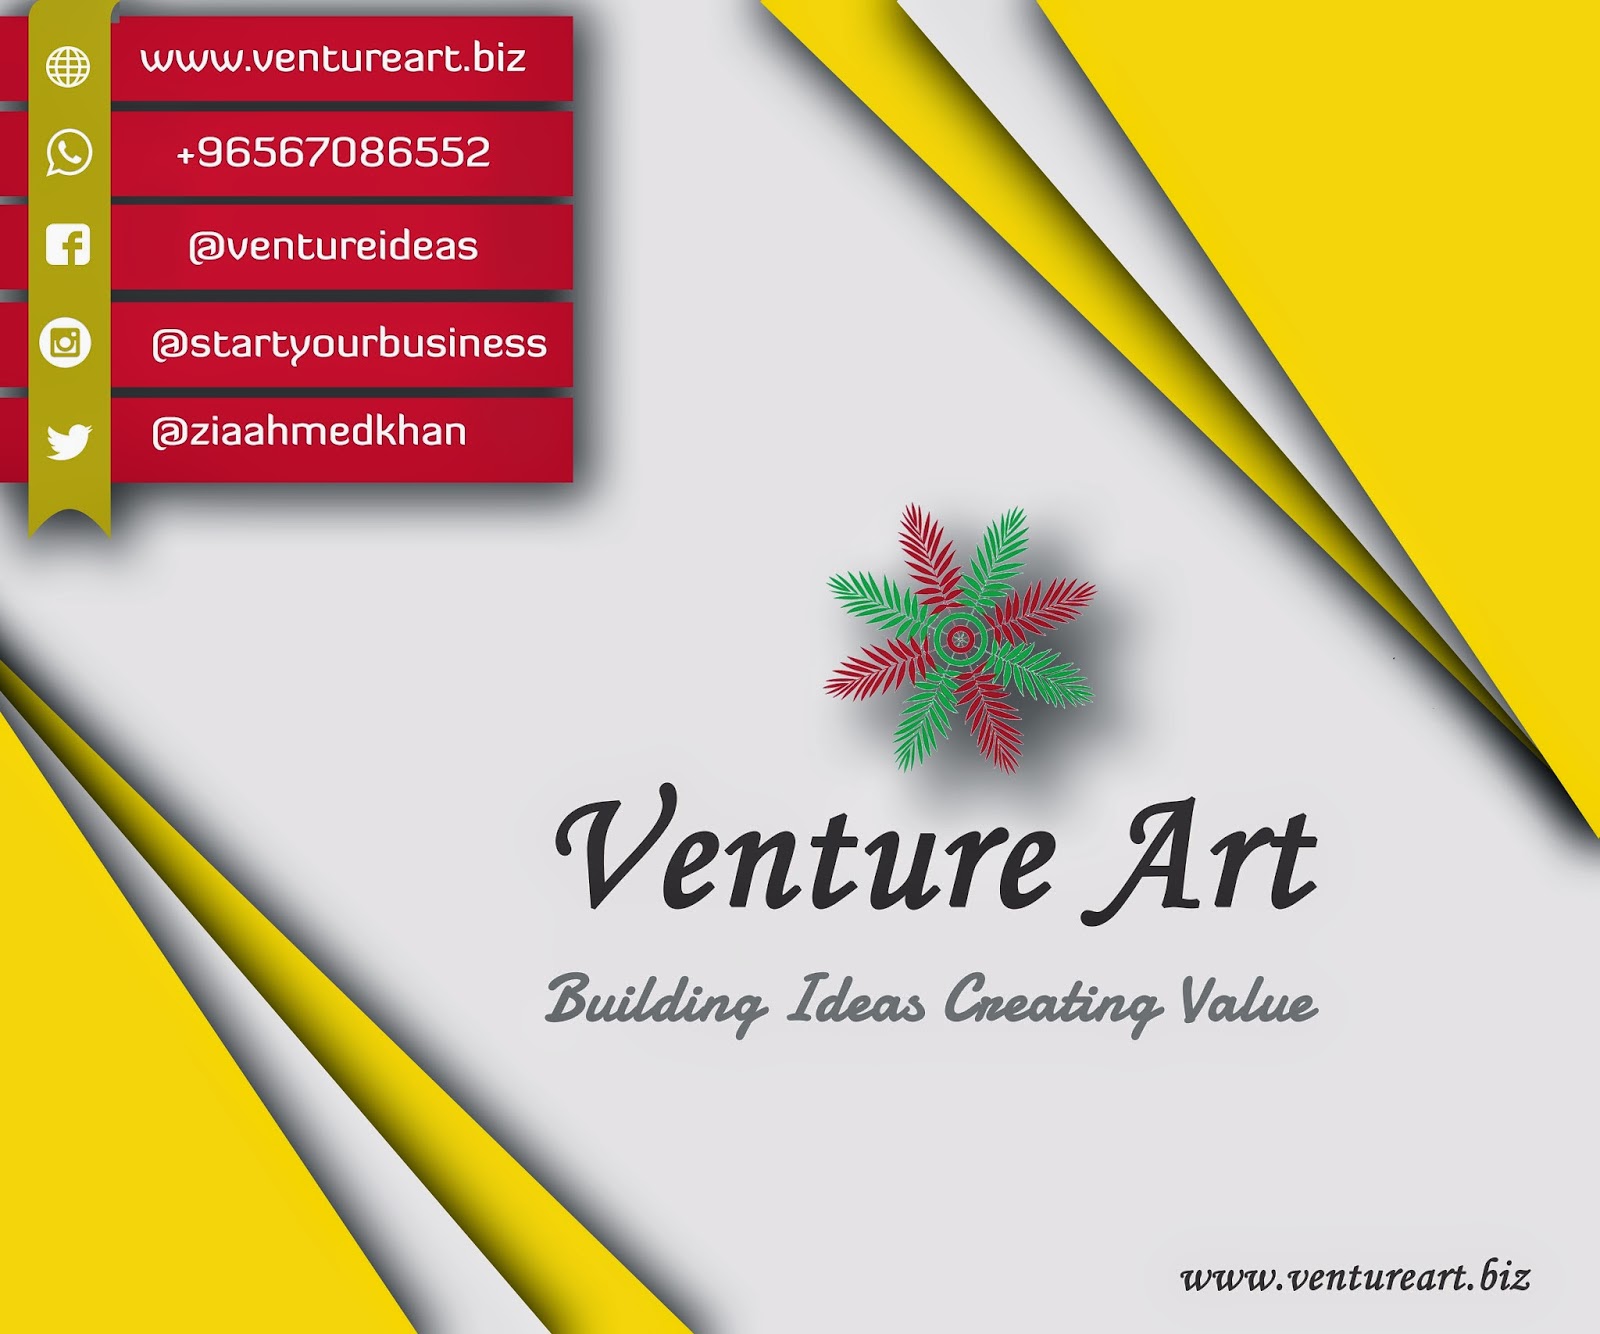 Building Ideas Creating Value - Venture Art, Small Business, Entrepreneurship, Start-Up